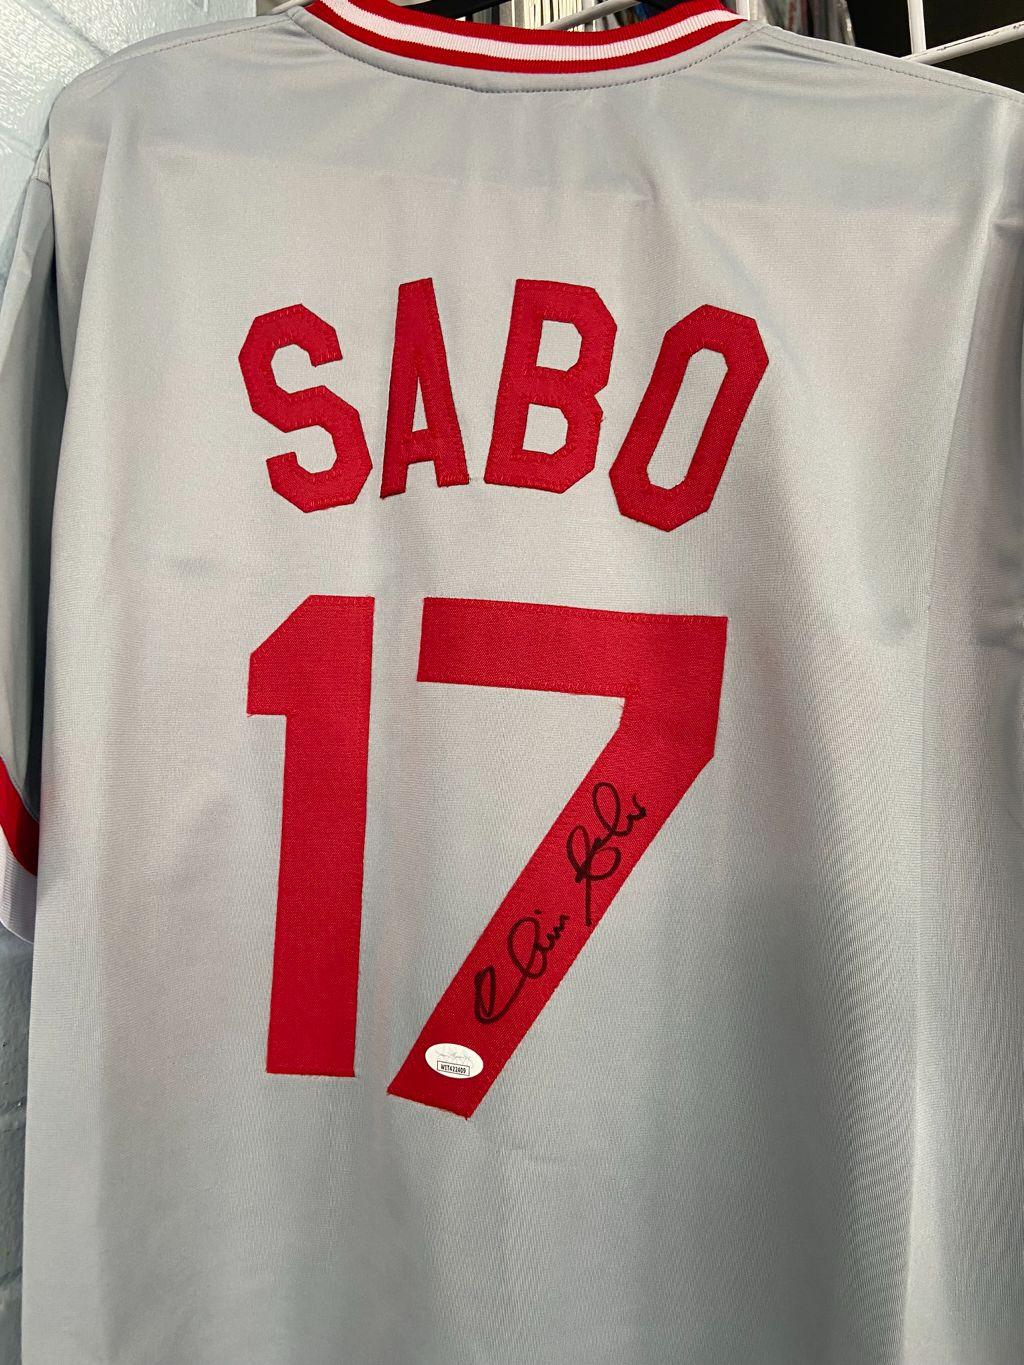 Chris Sabo Signed Jersey